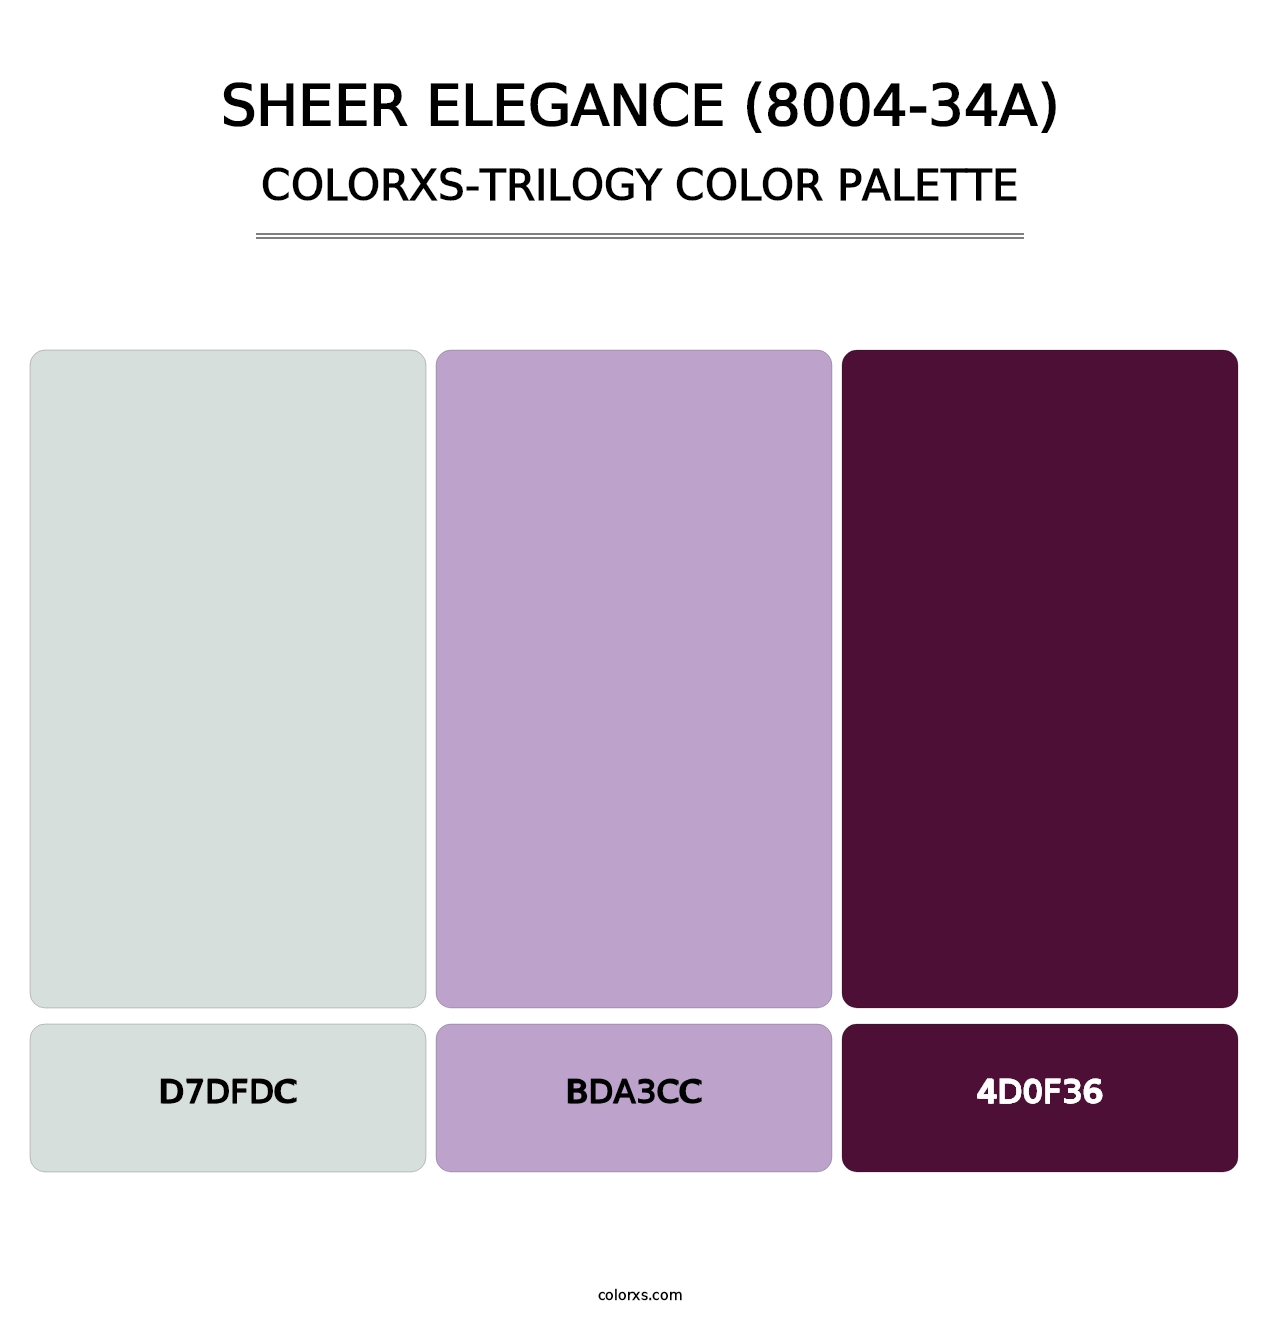 Sheer Elegance (8004-34A) - Colorxs Trilogy Palette